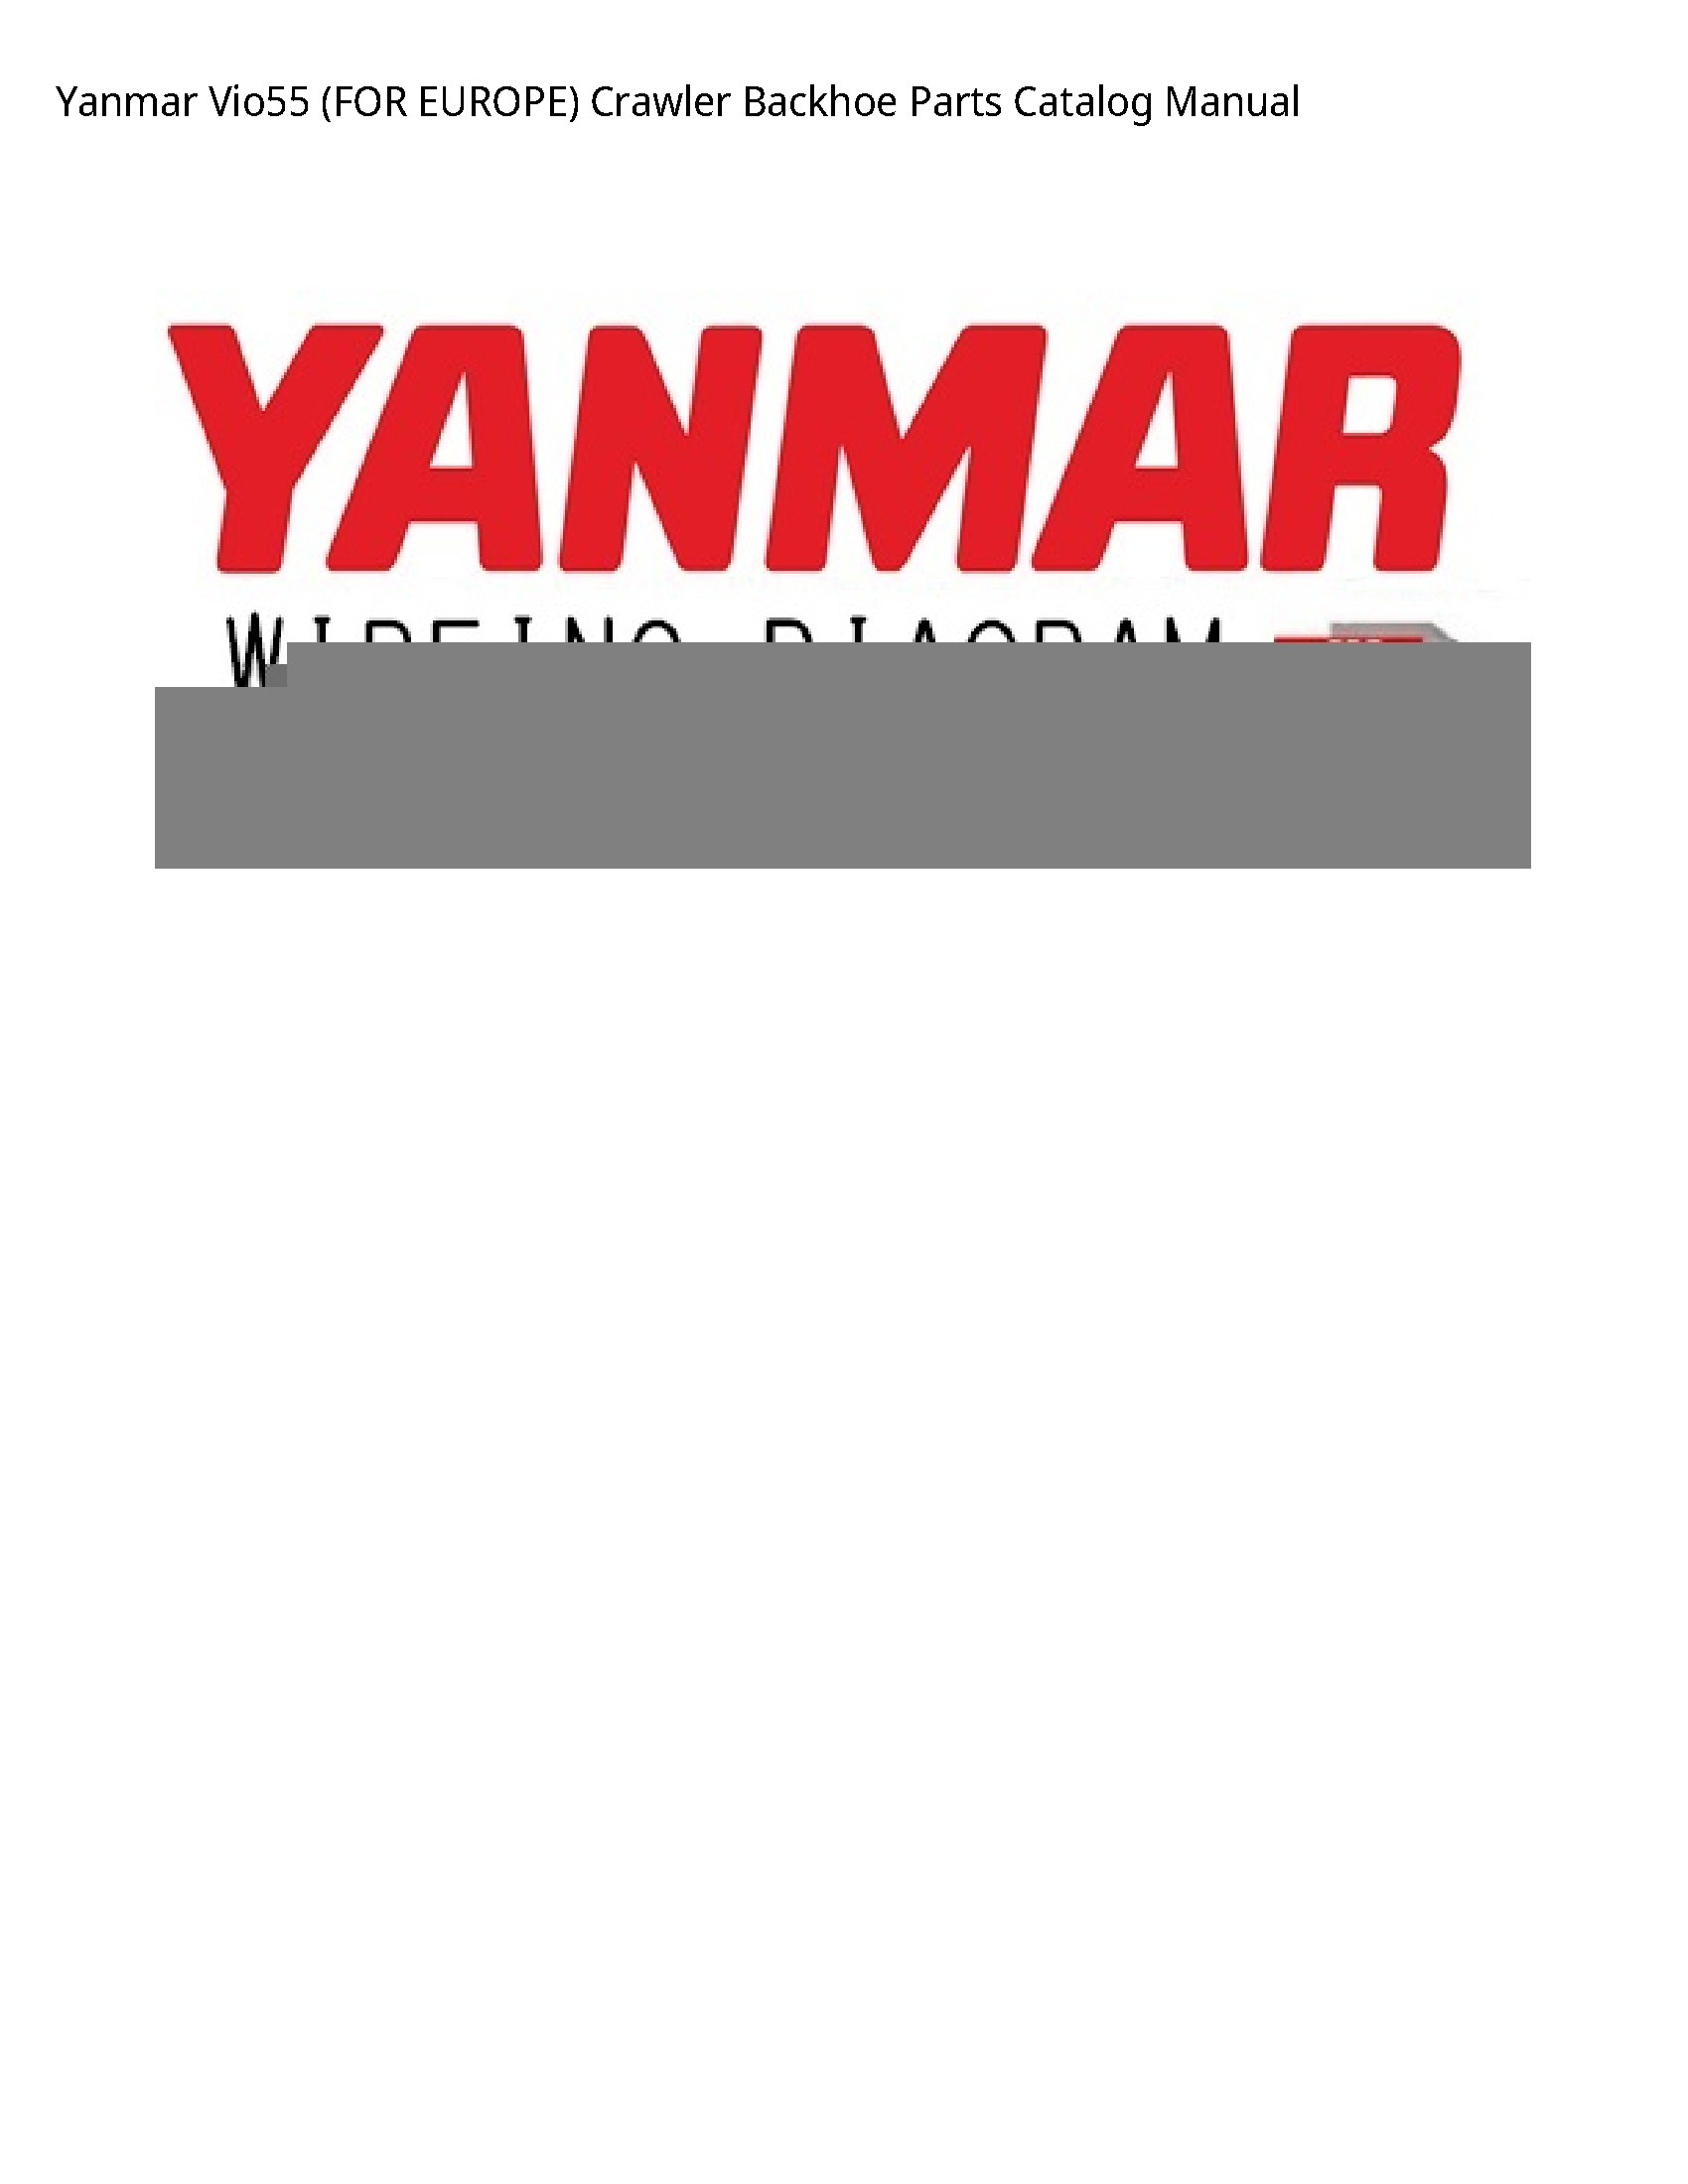 Yanmar Vio55 (FOR EUROPE) Crawler Backhoe Parts Catalog manual